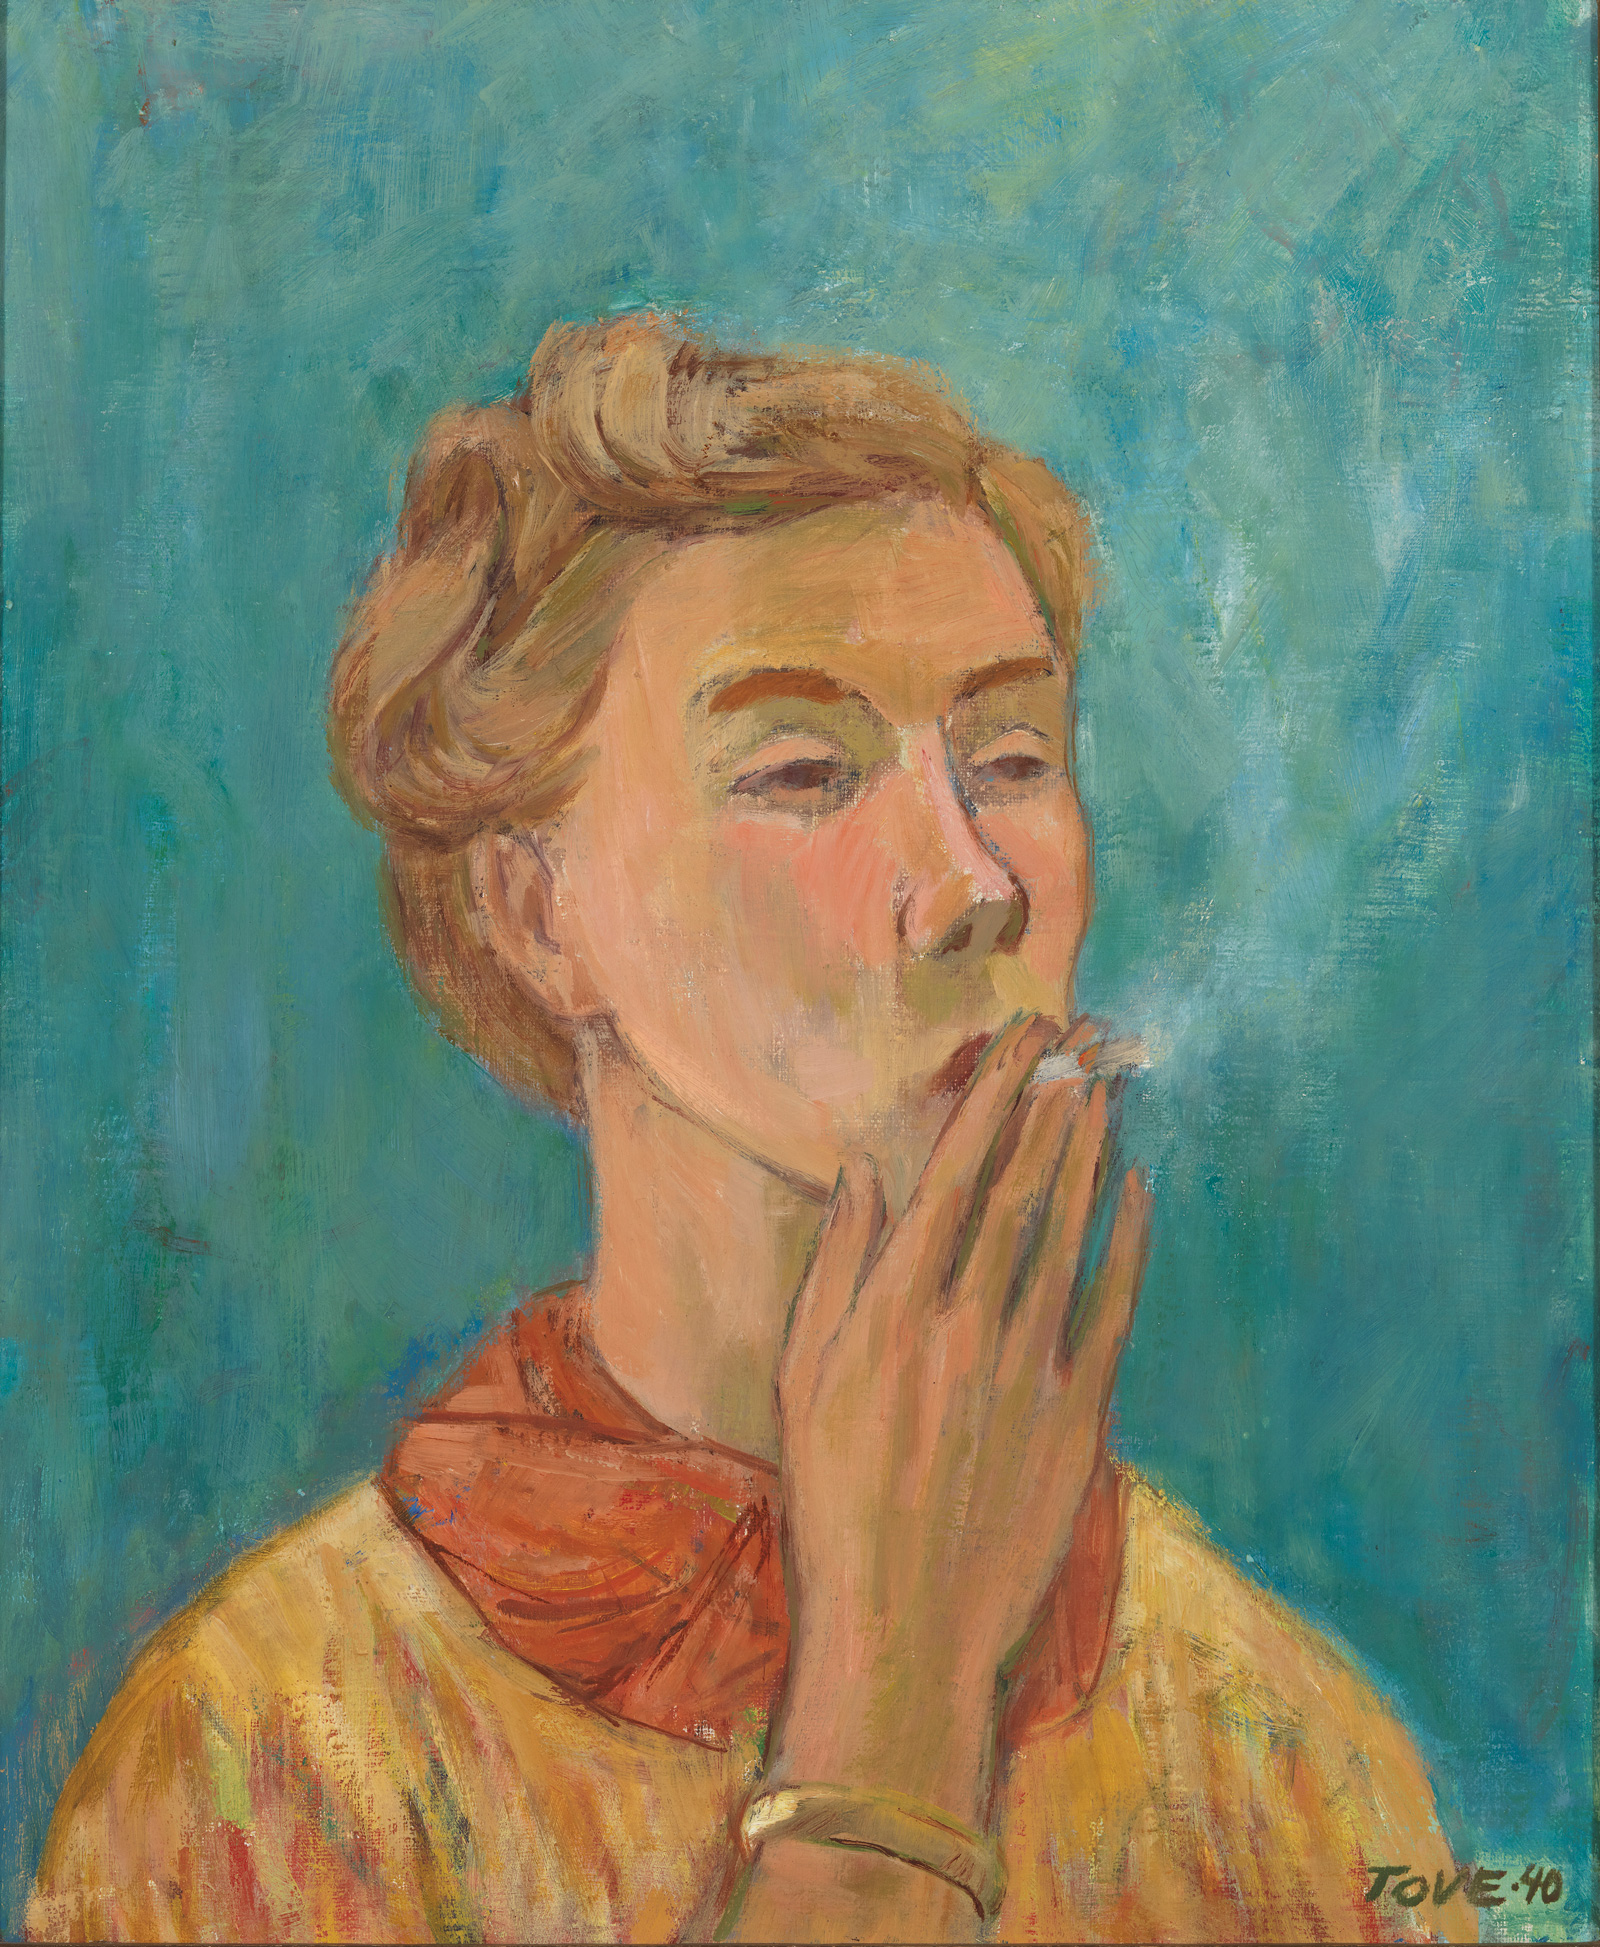 Tove Jansson: Smoking Girl (Self-Portrait), 1940